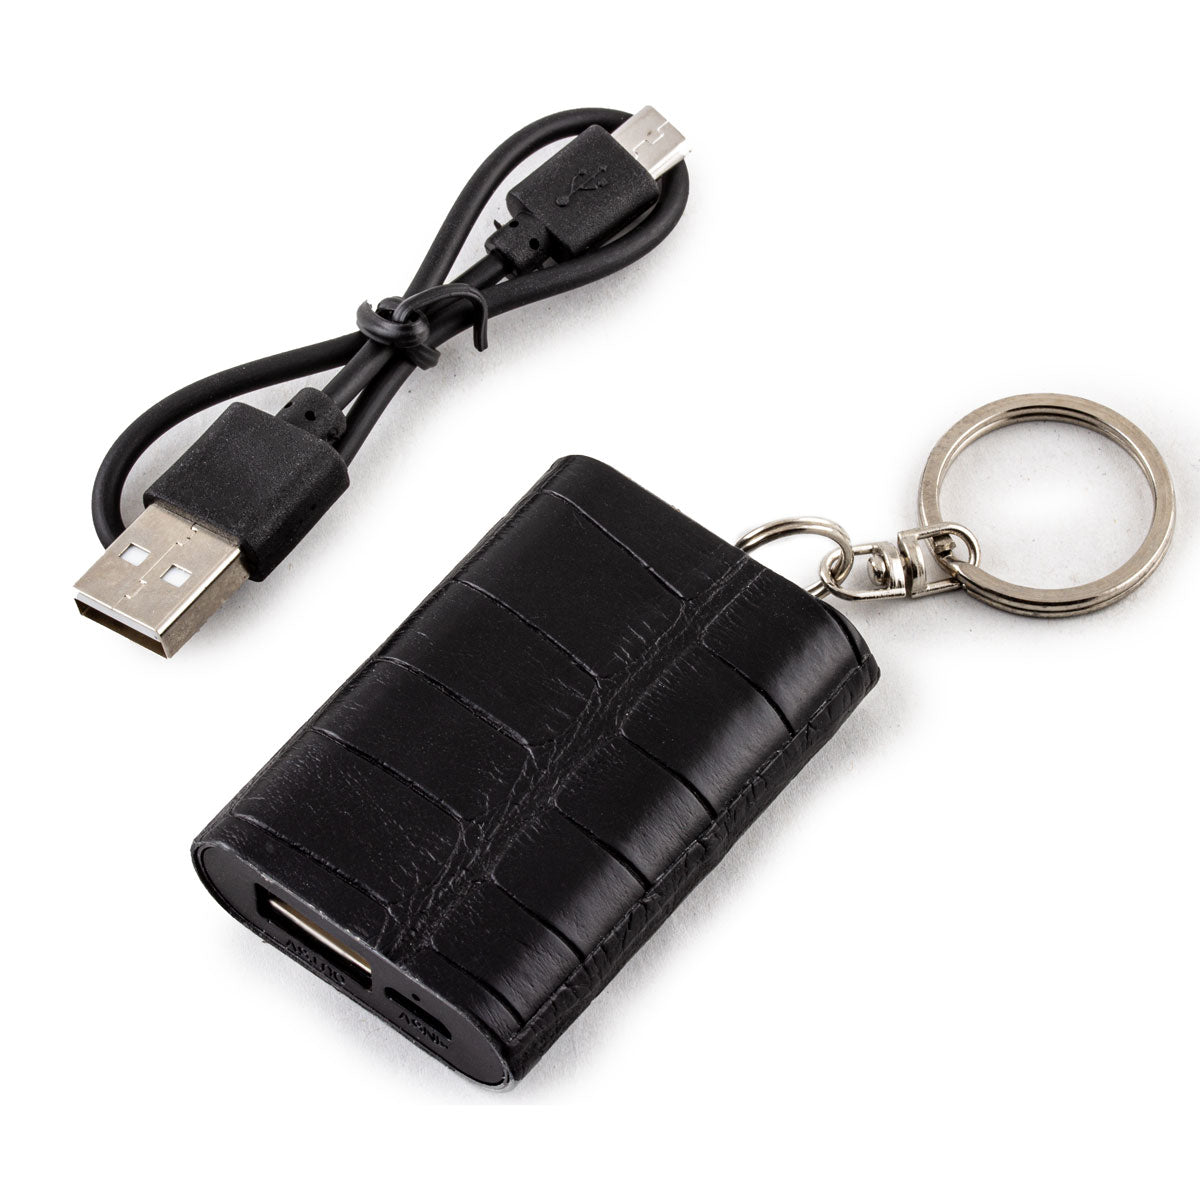 Mini Powerbank / External battery keychain - Alligator - Universal charger iPhone, Samsung, smartphone, tablet ... (black, brown, blue, gray)